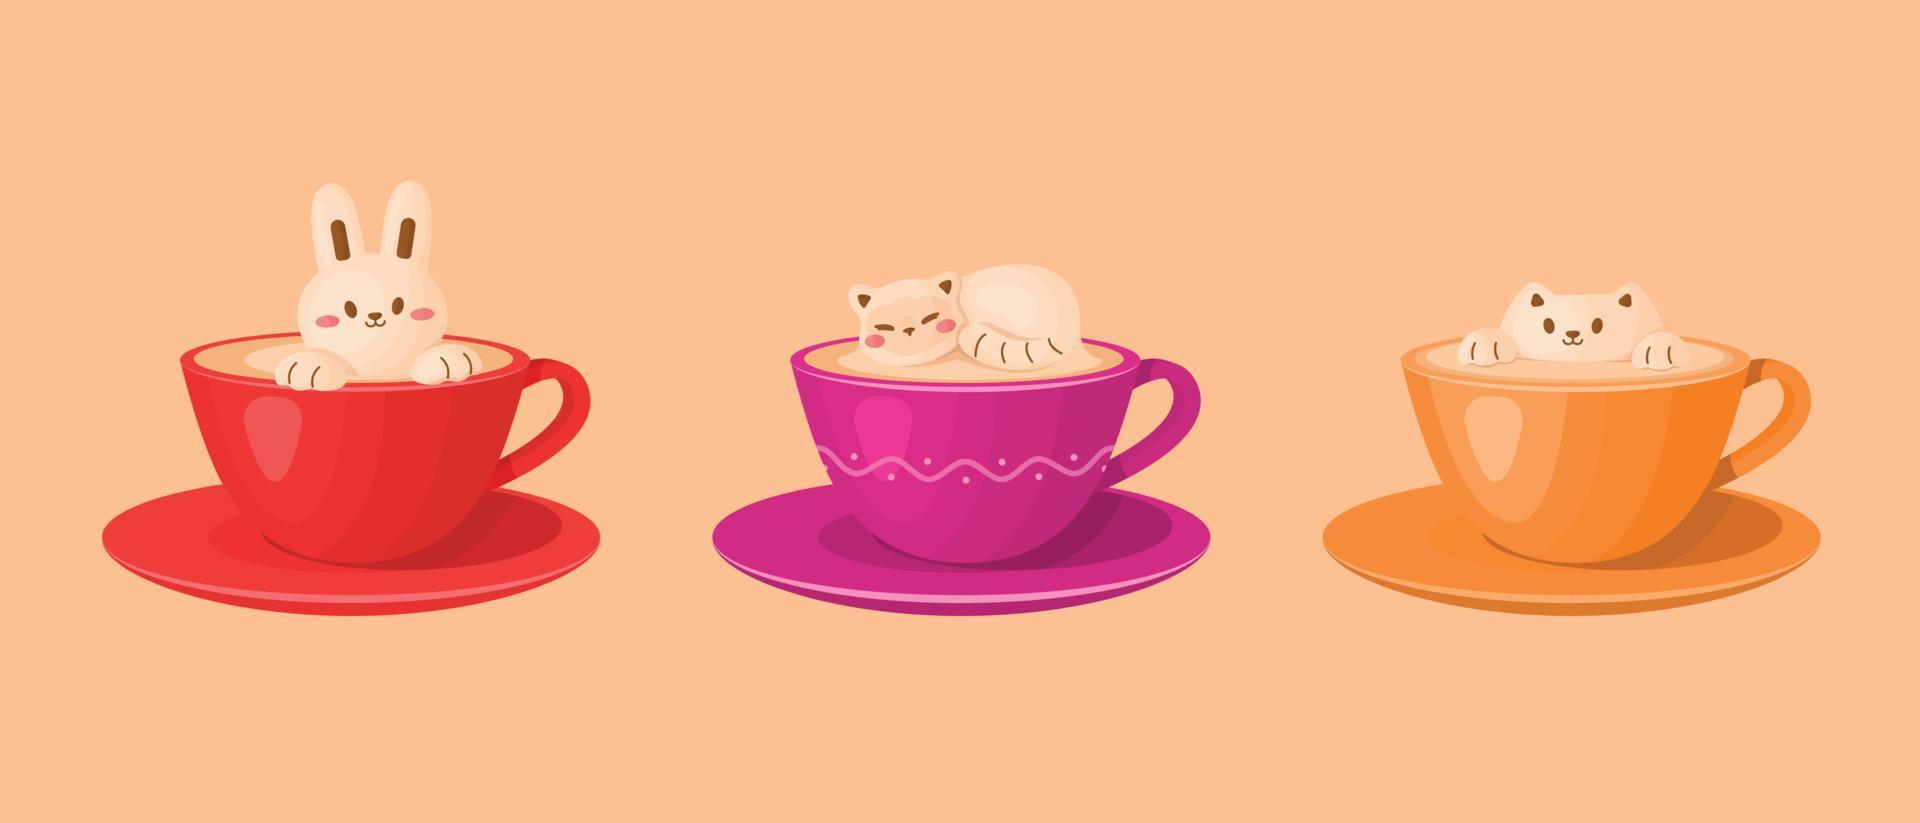 Coffee cups of foam milk in 3D latte art, cat and bunny shape. vector